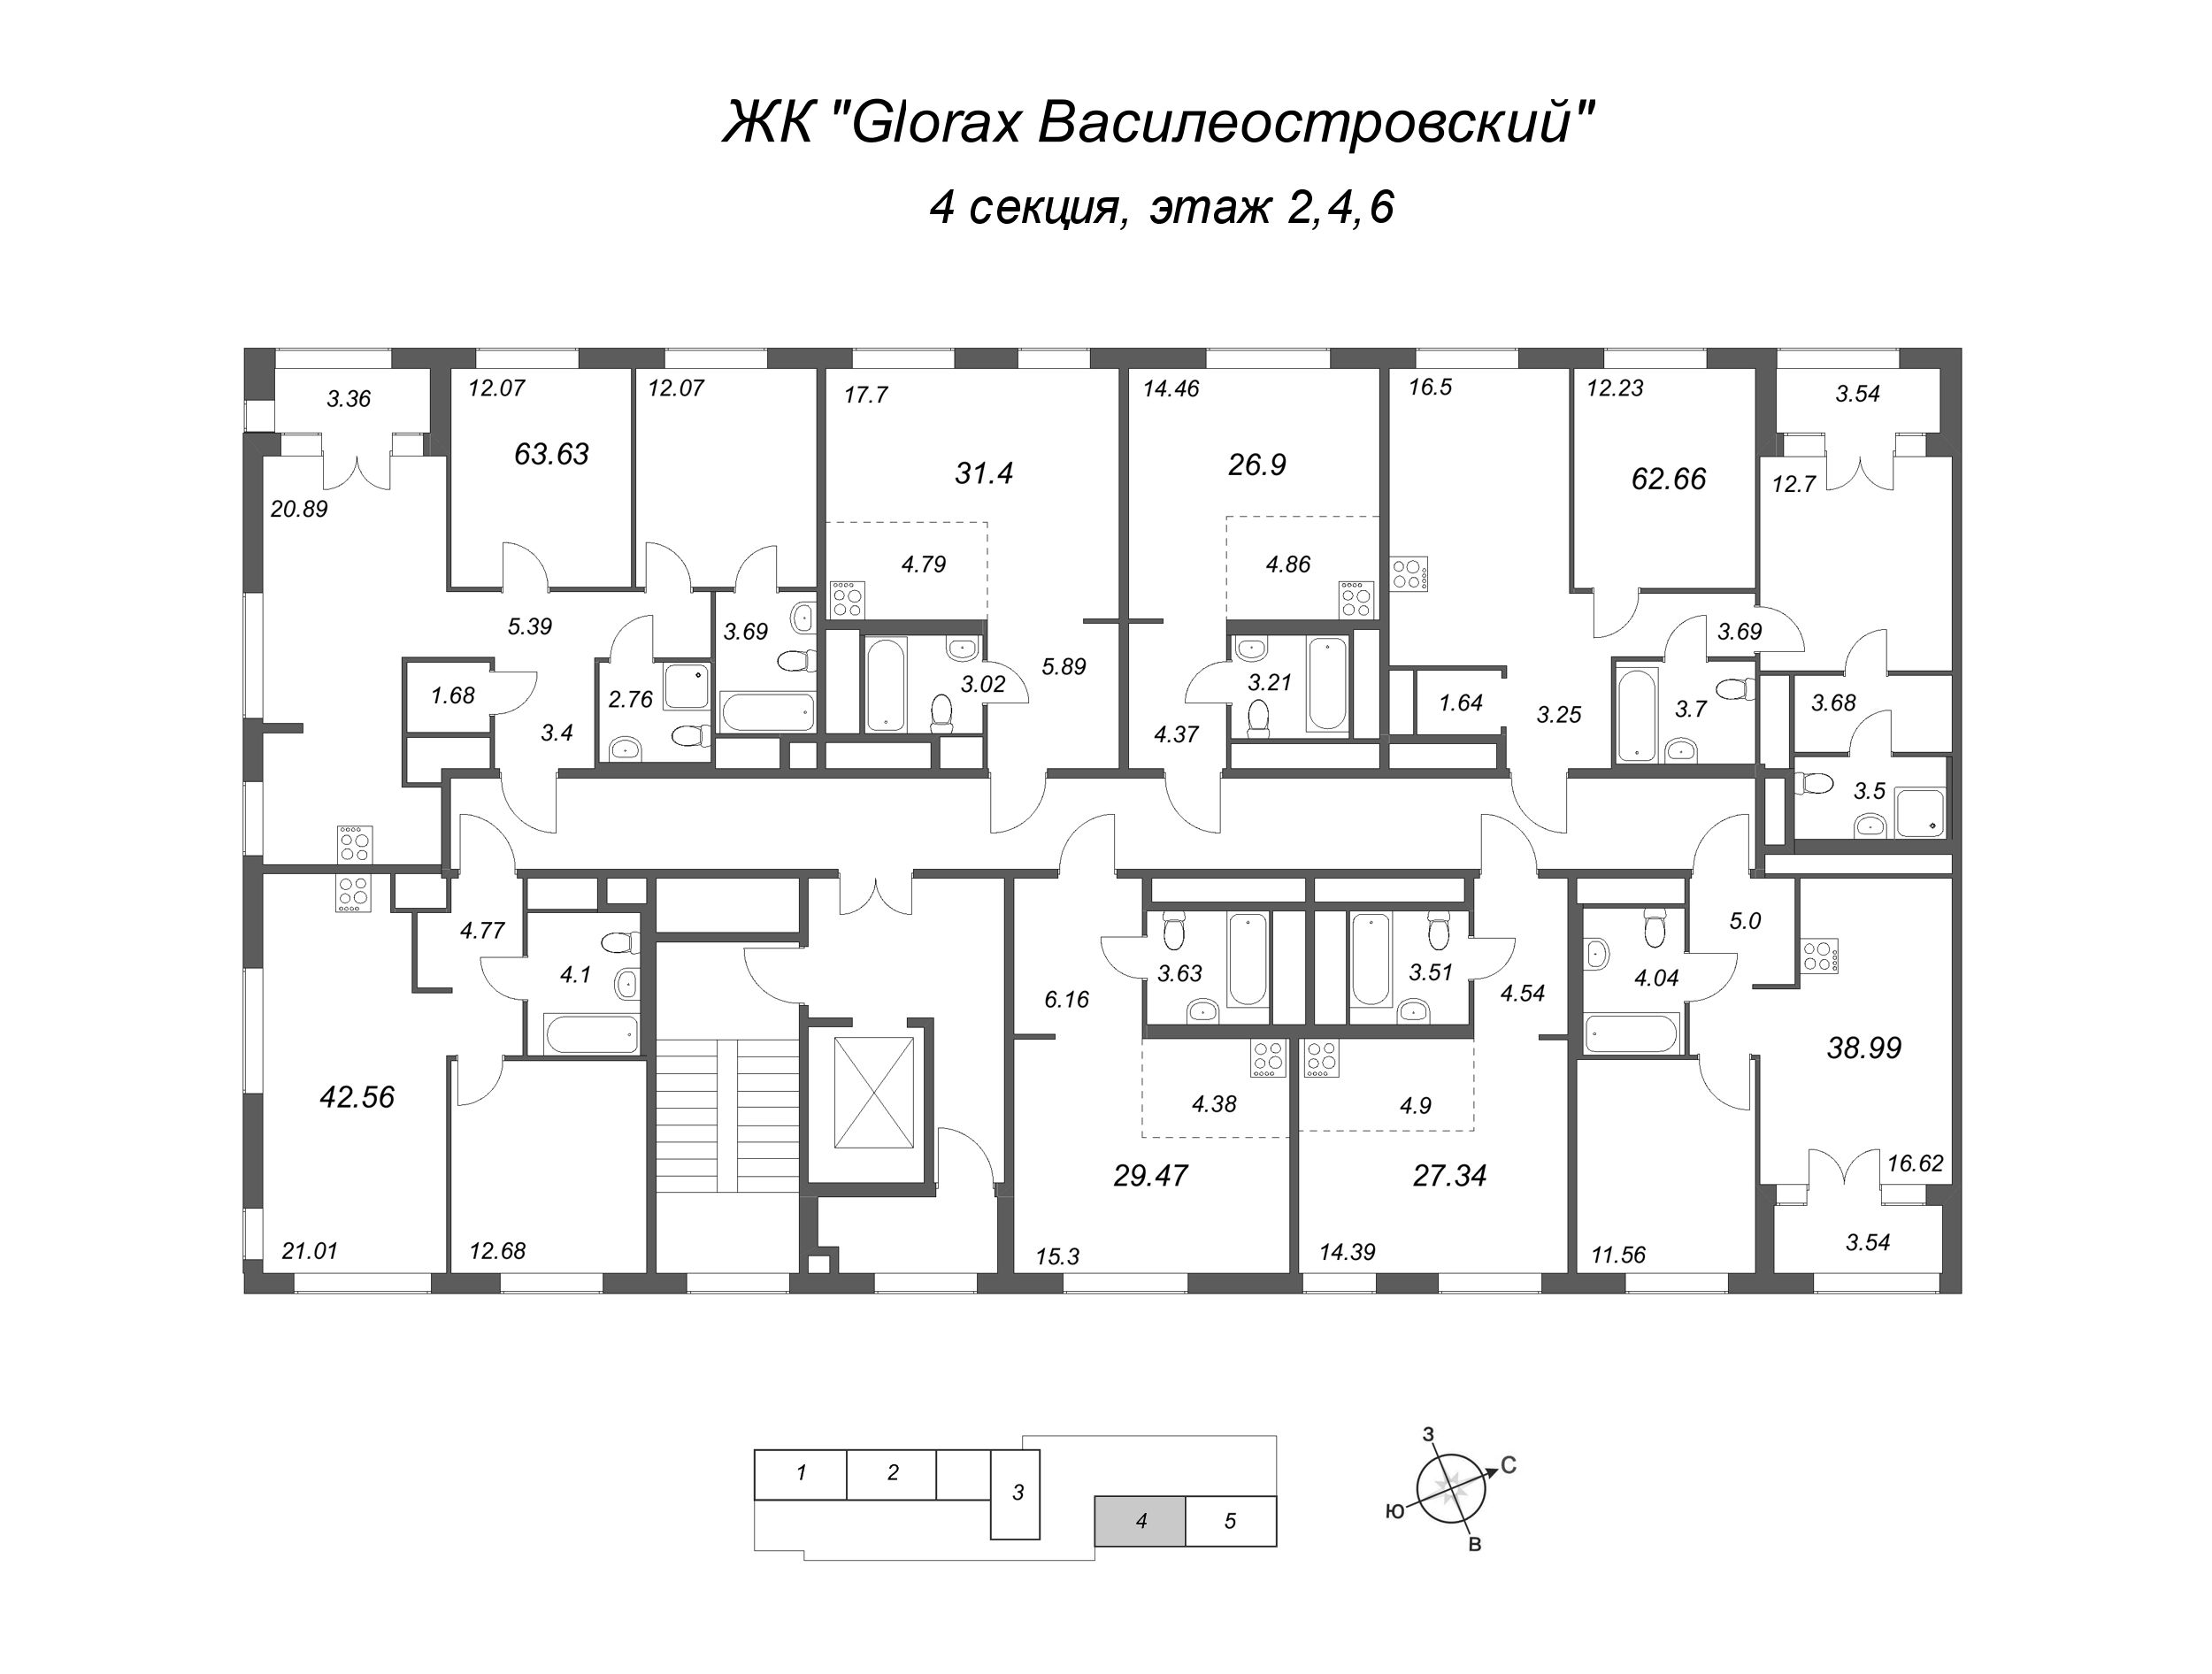 2-комнатная (Евро) квартира, 42.56 м² - планировка этажа